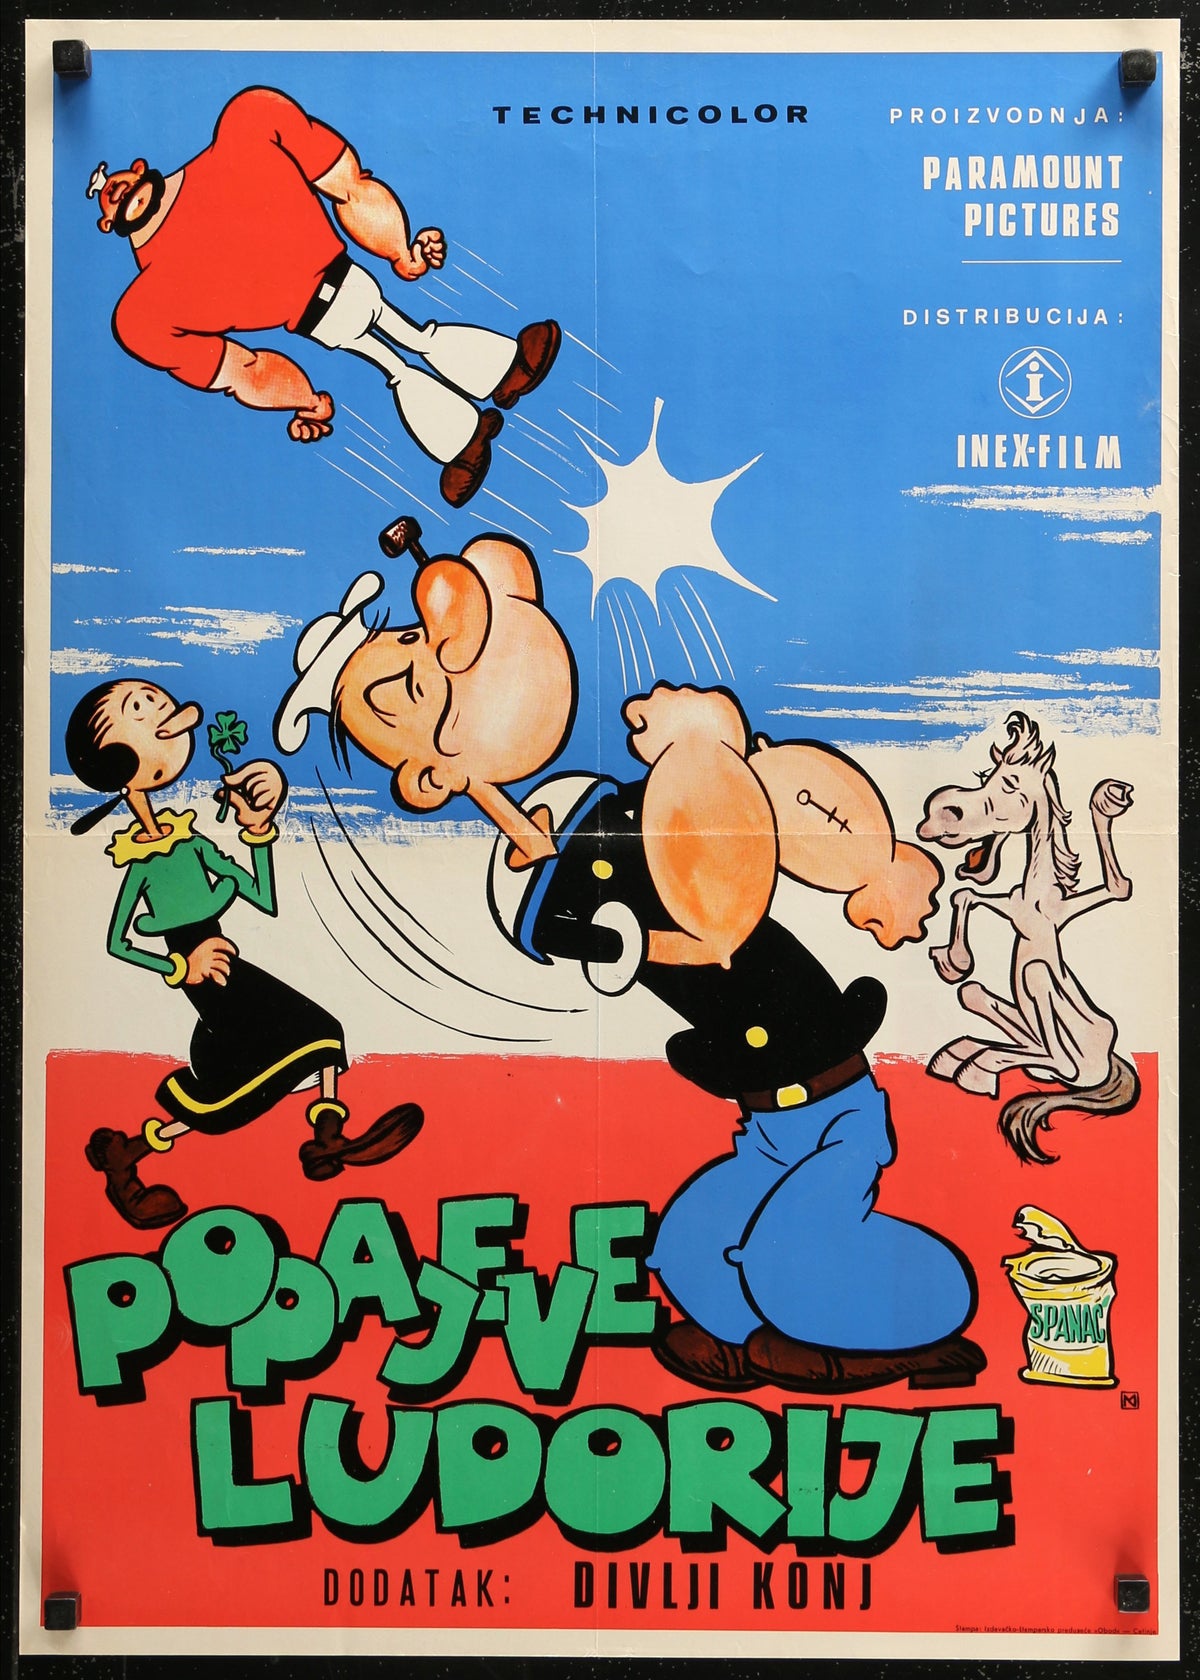 Popajeve Ludorije- Popeye Follies - Authentic Vintage Poster